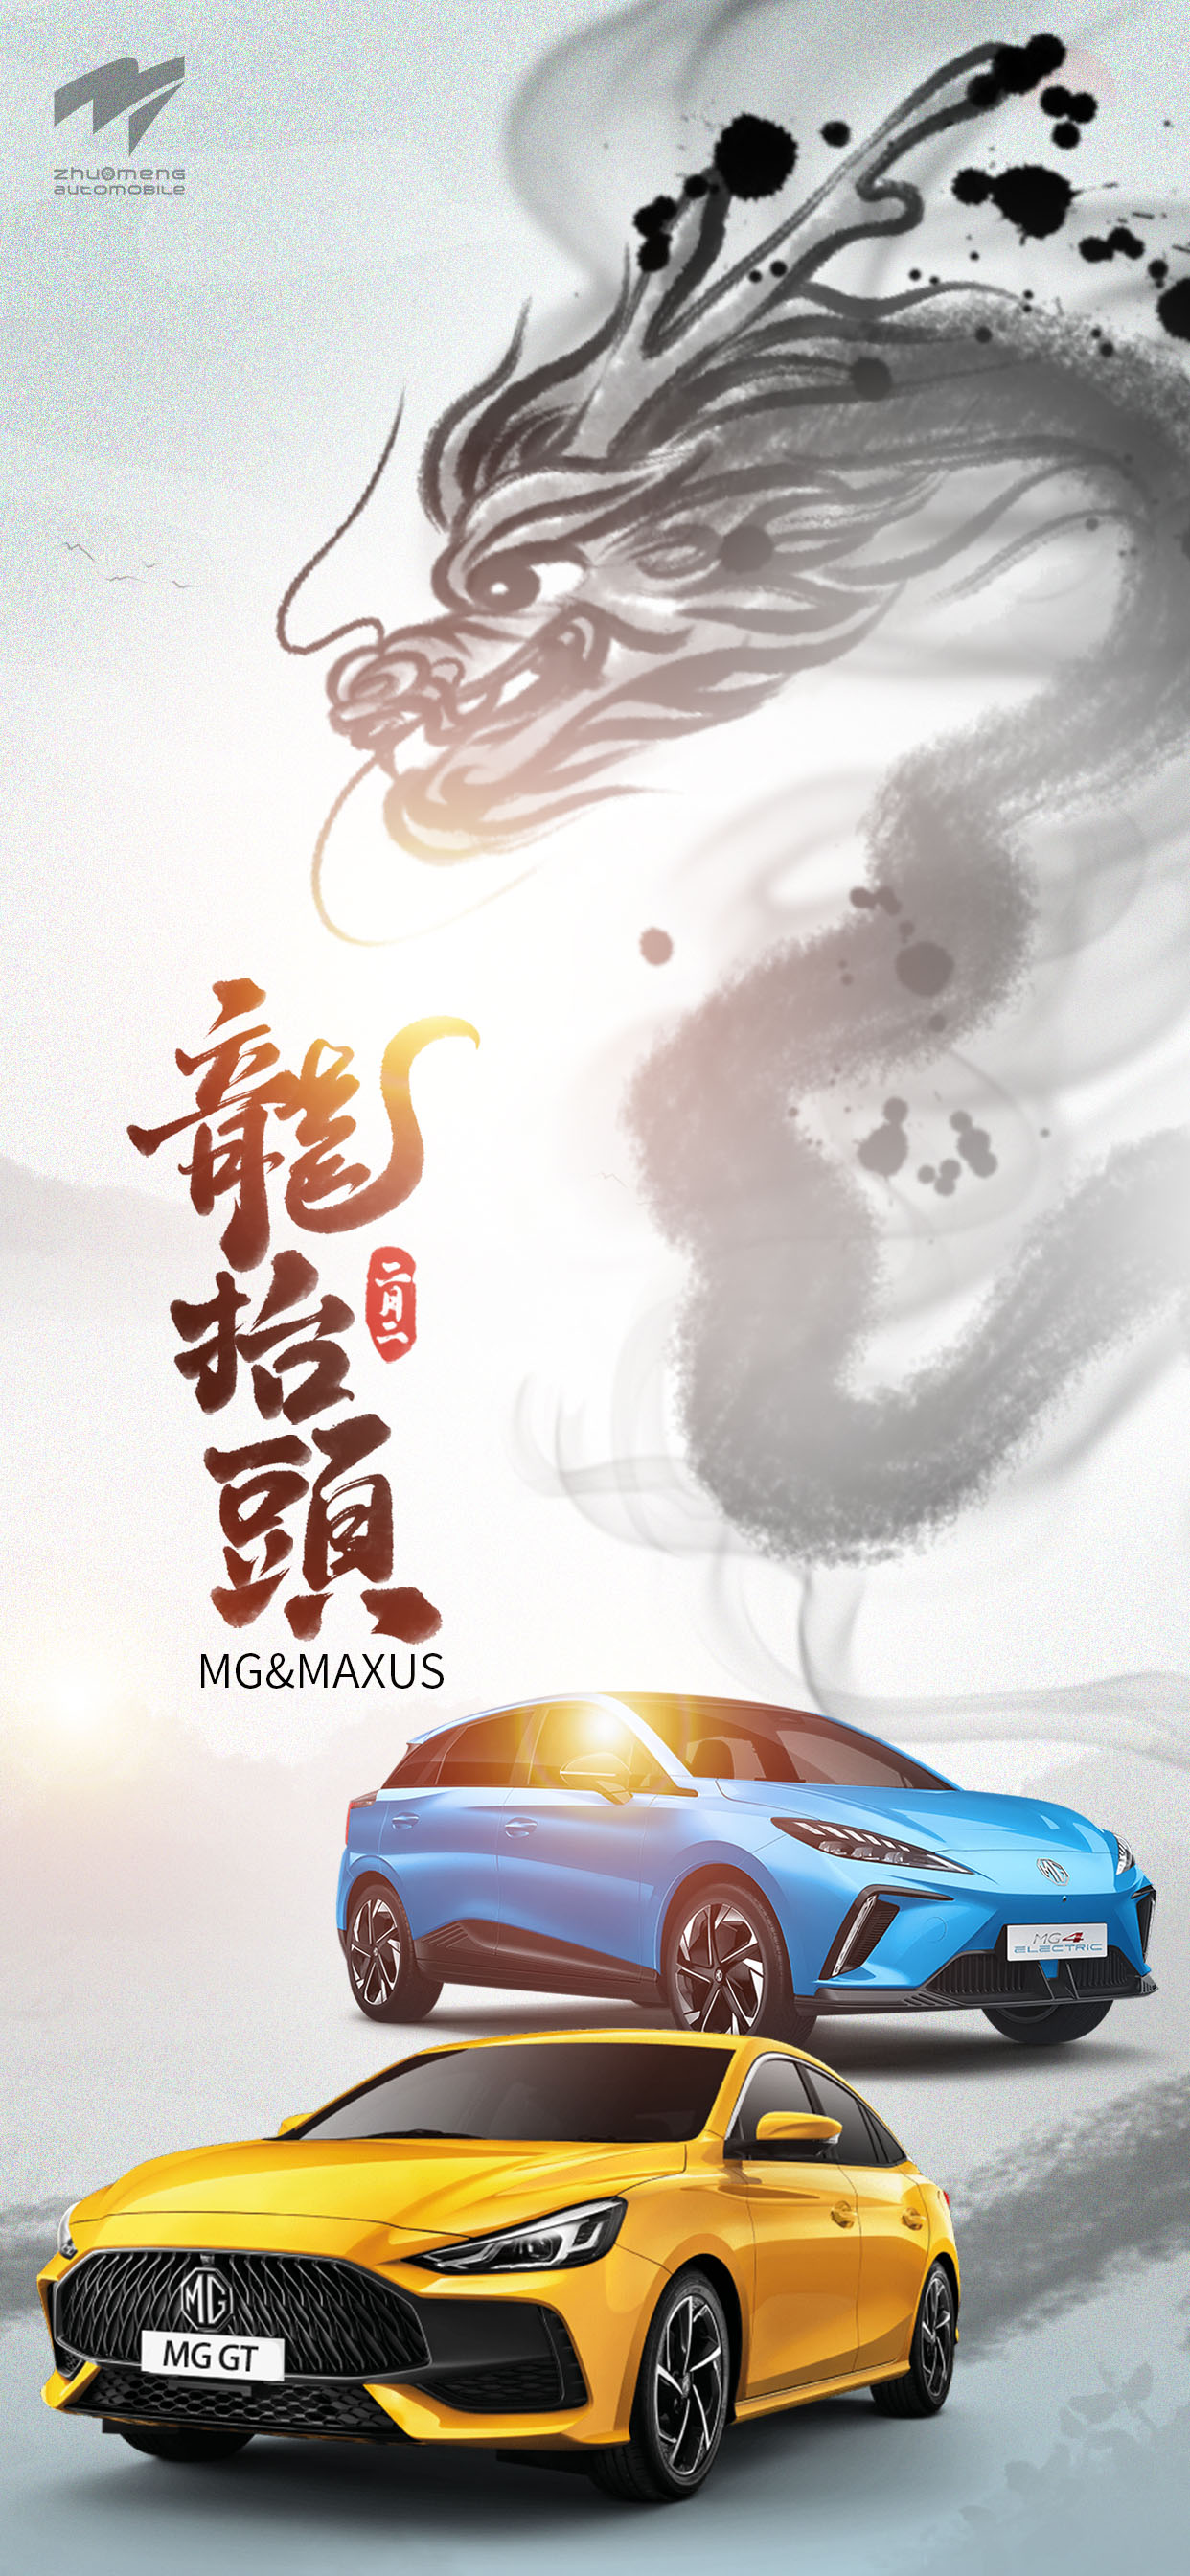 Zhuo Meng (Shanghai) Automobile Co., Ltd. Dragon Head (2 Φεβρουαρίου του σεληνιακού ημερολογίου)